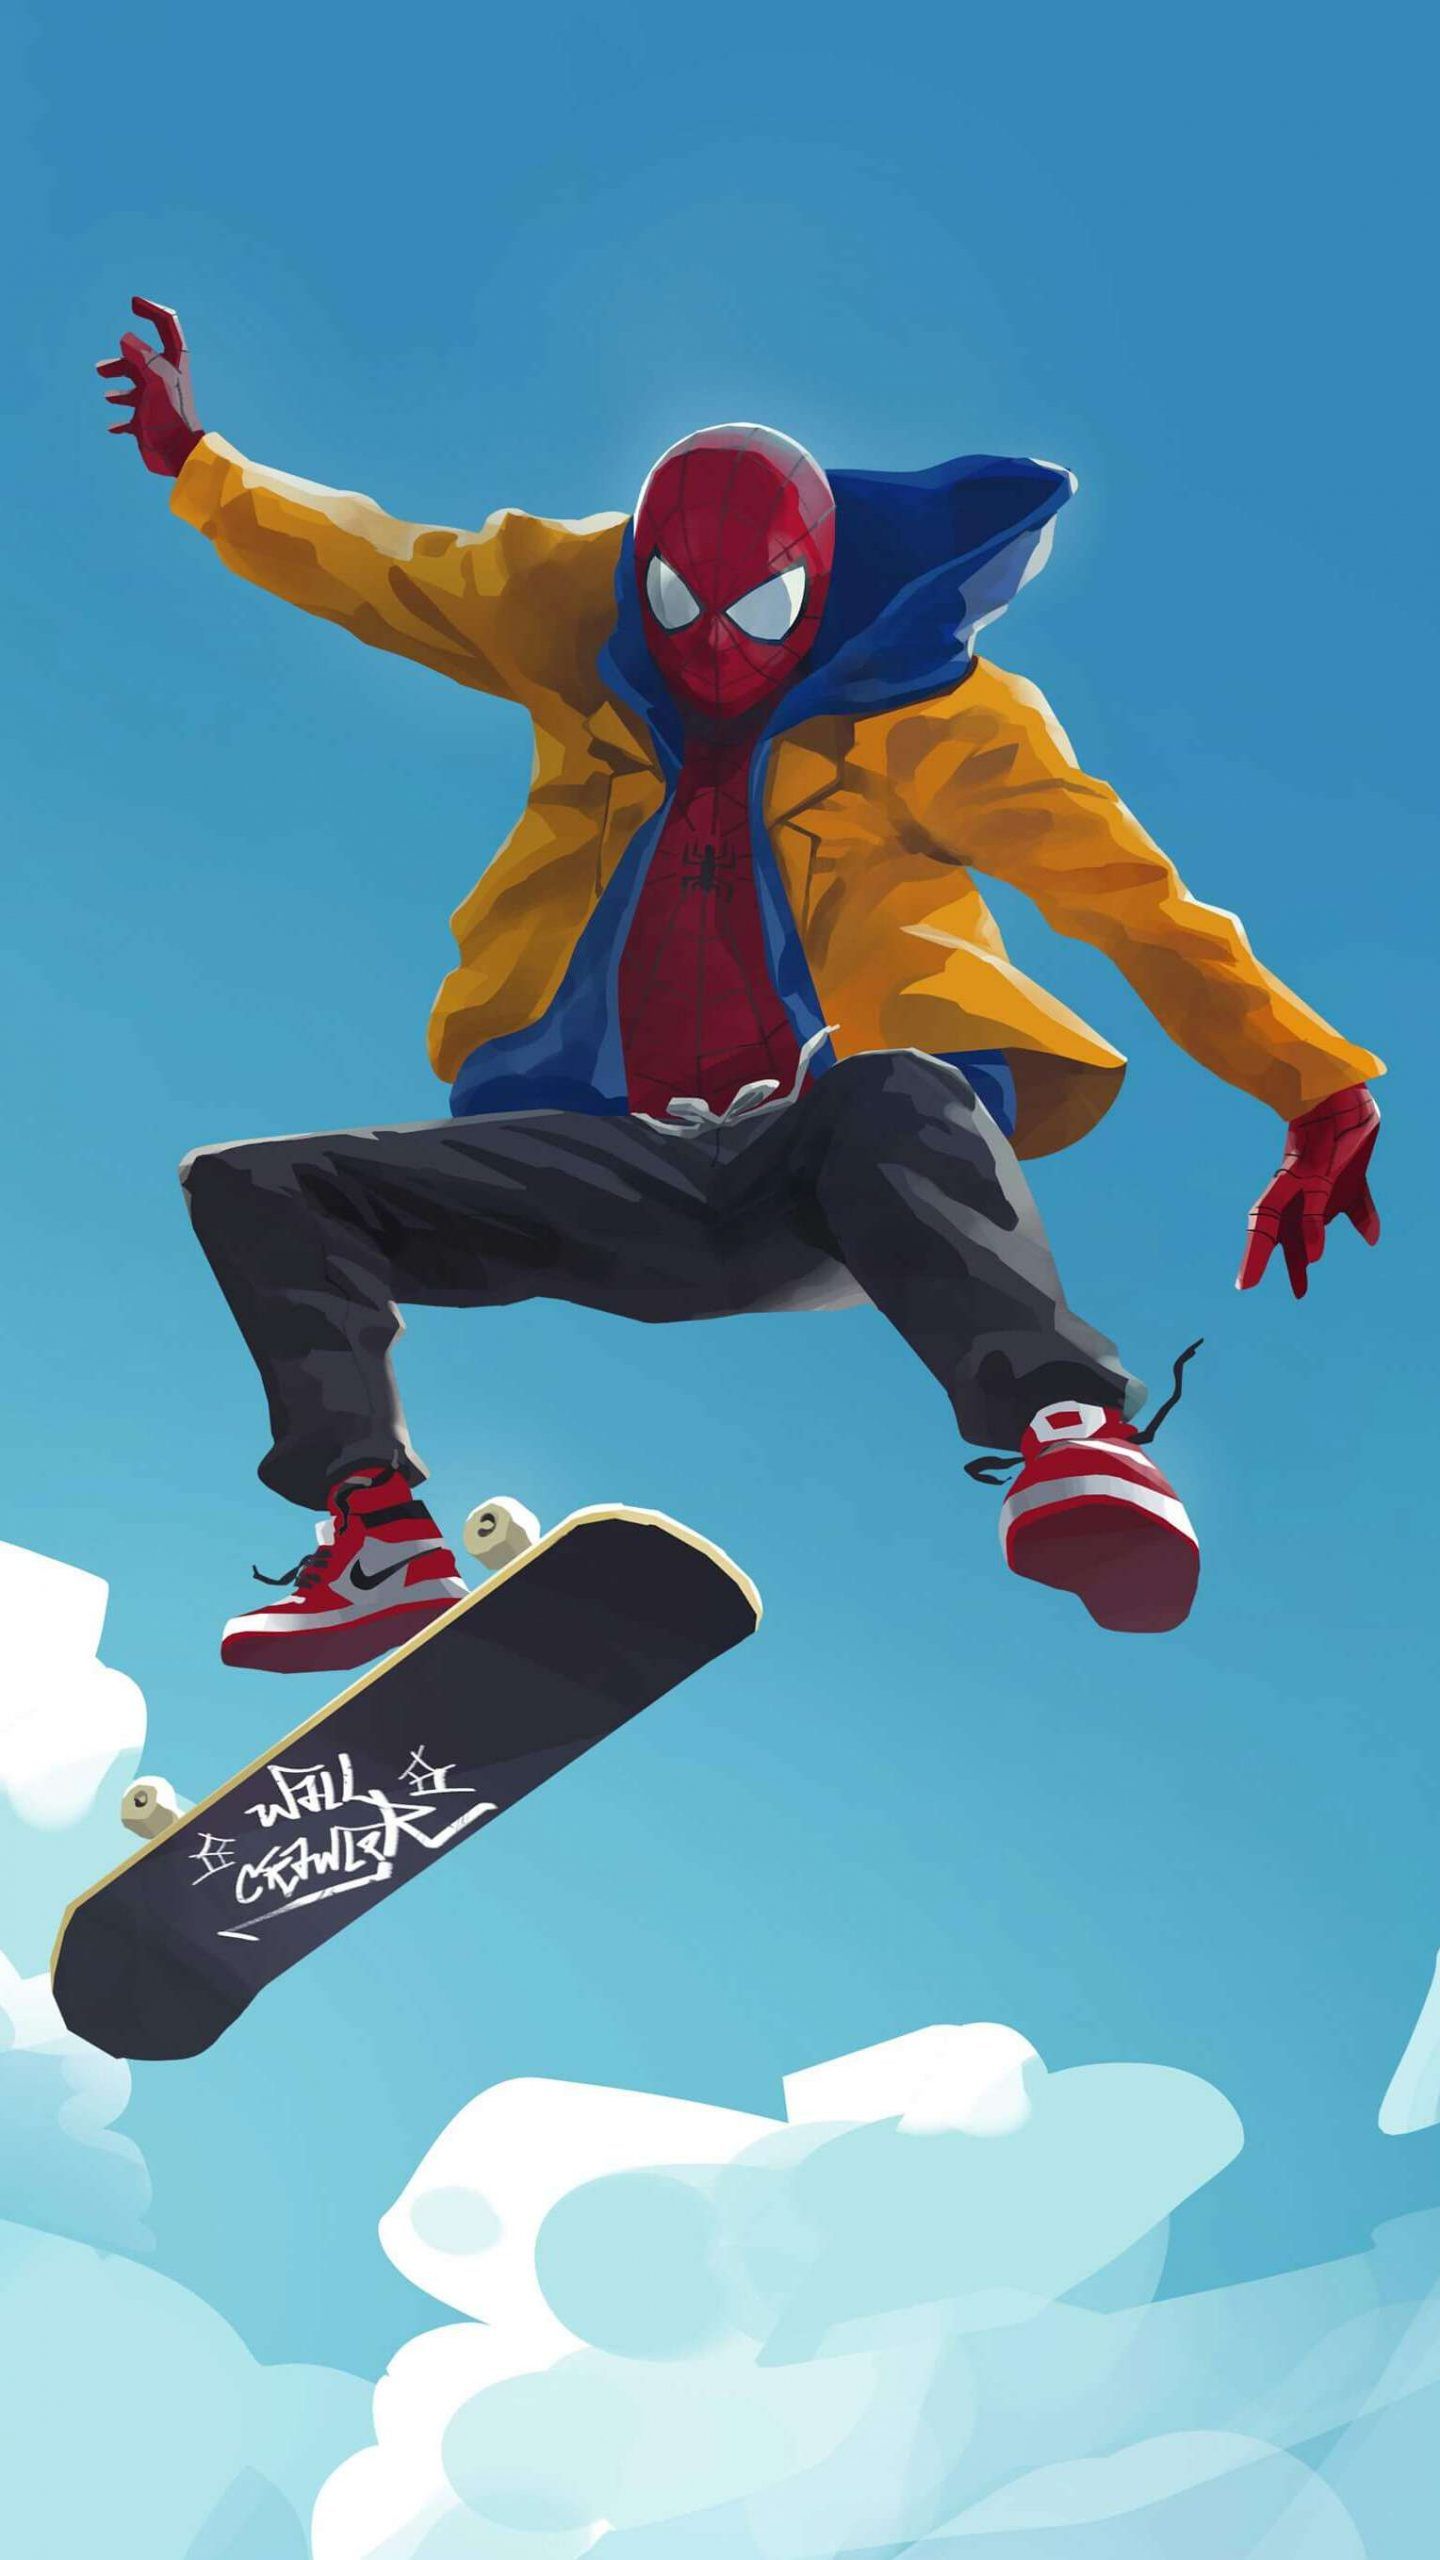 SpiderMan Skateboarding Wallpaper Wallpaper, iPhone Wallpaper